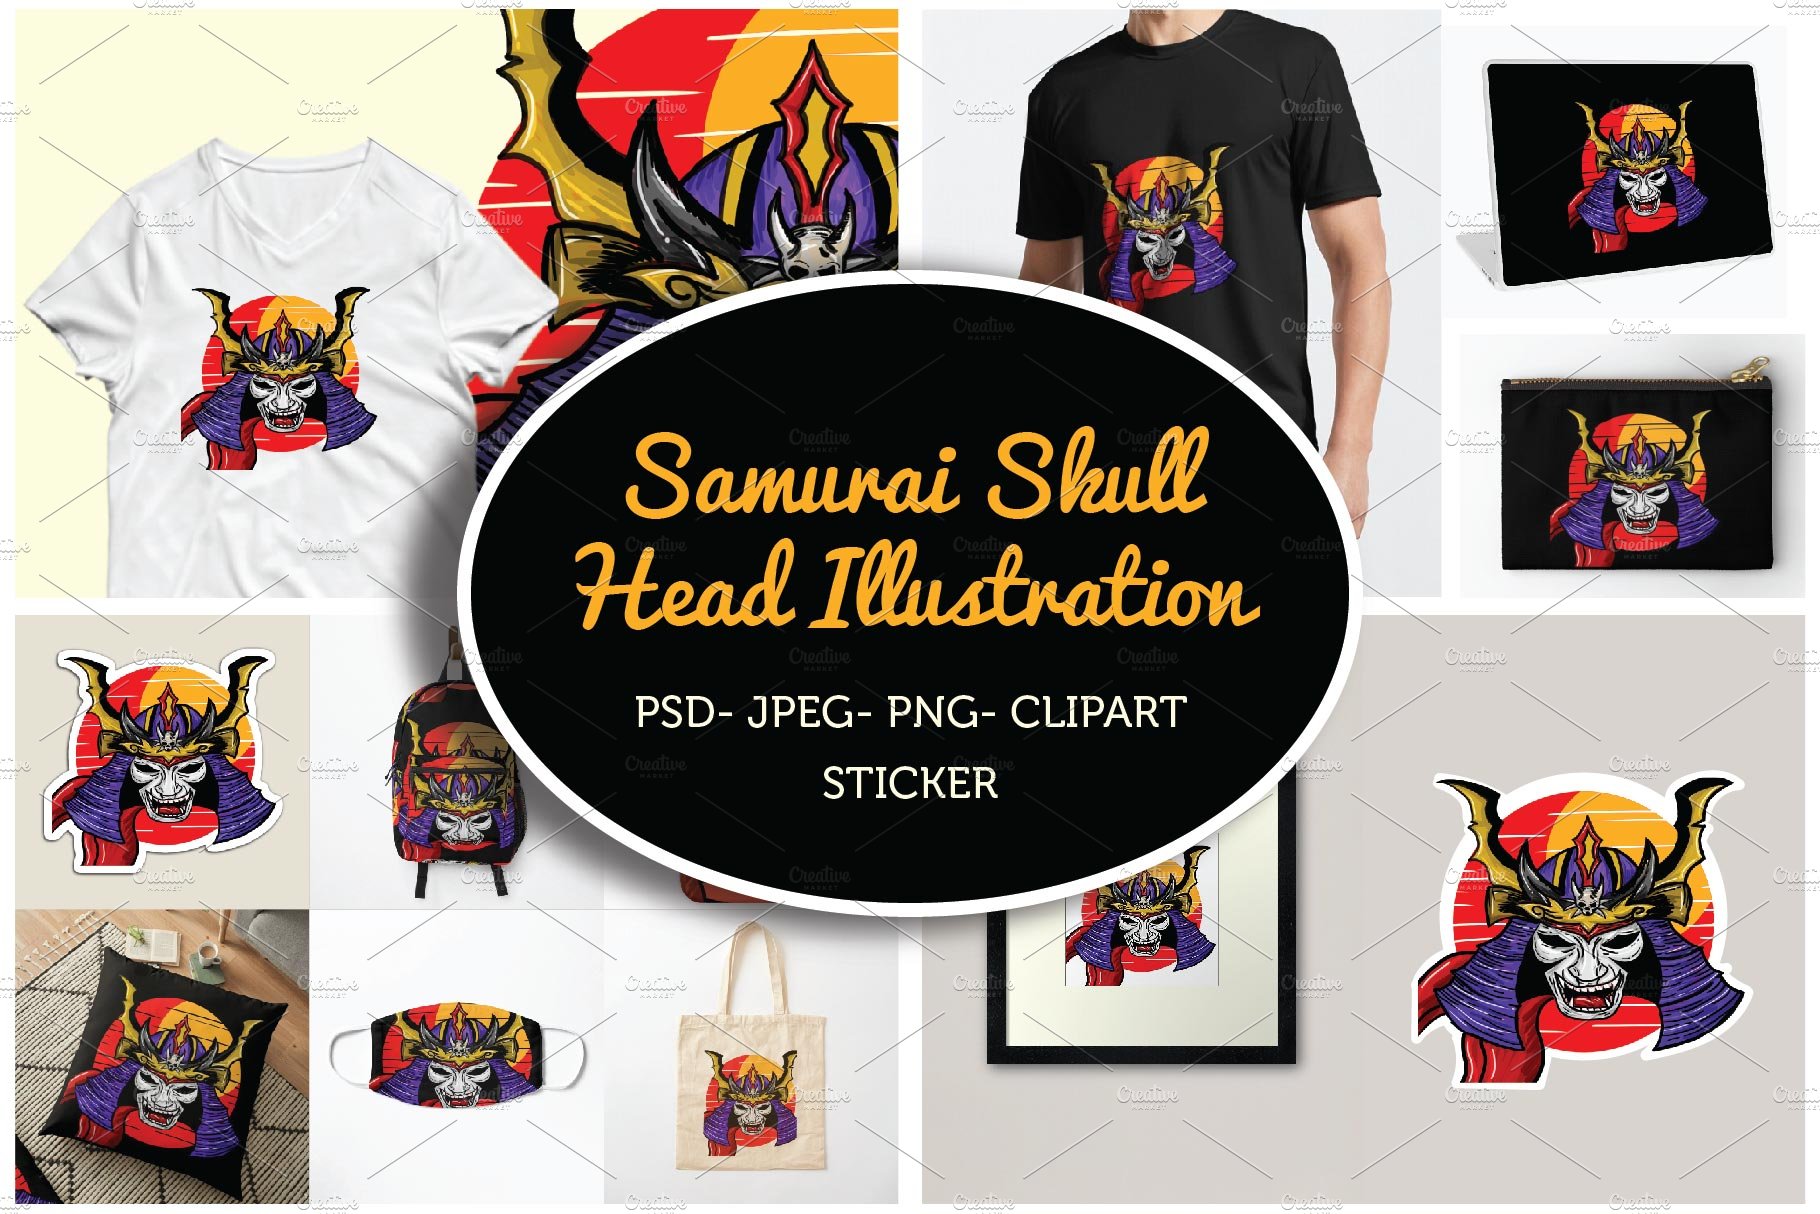 Samurai Skull Head cover image.